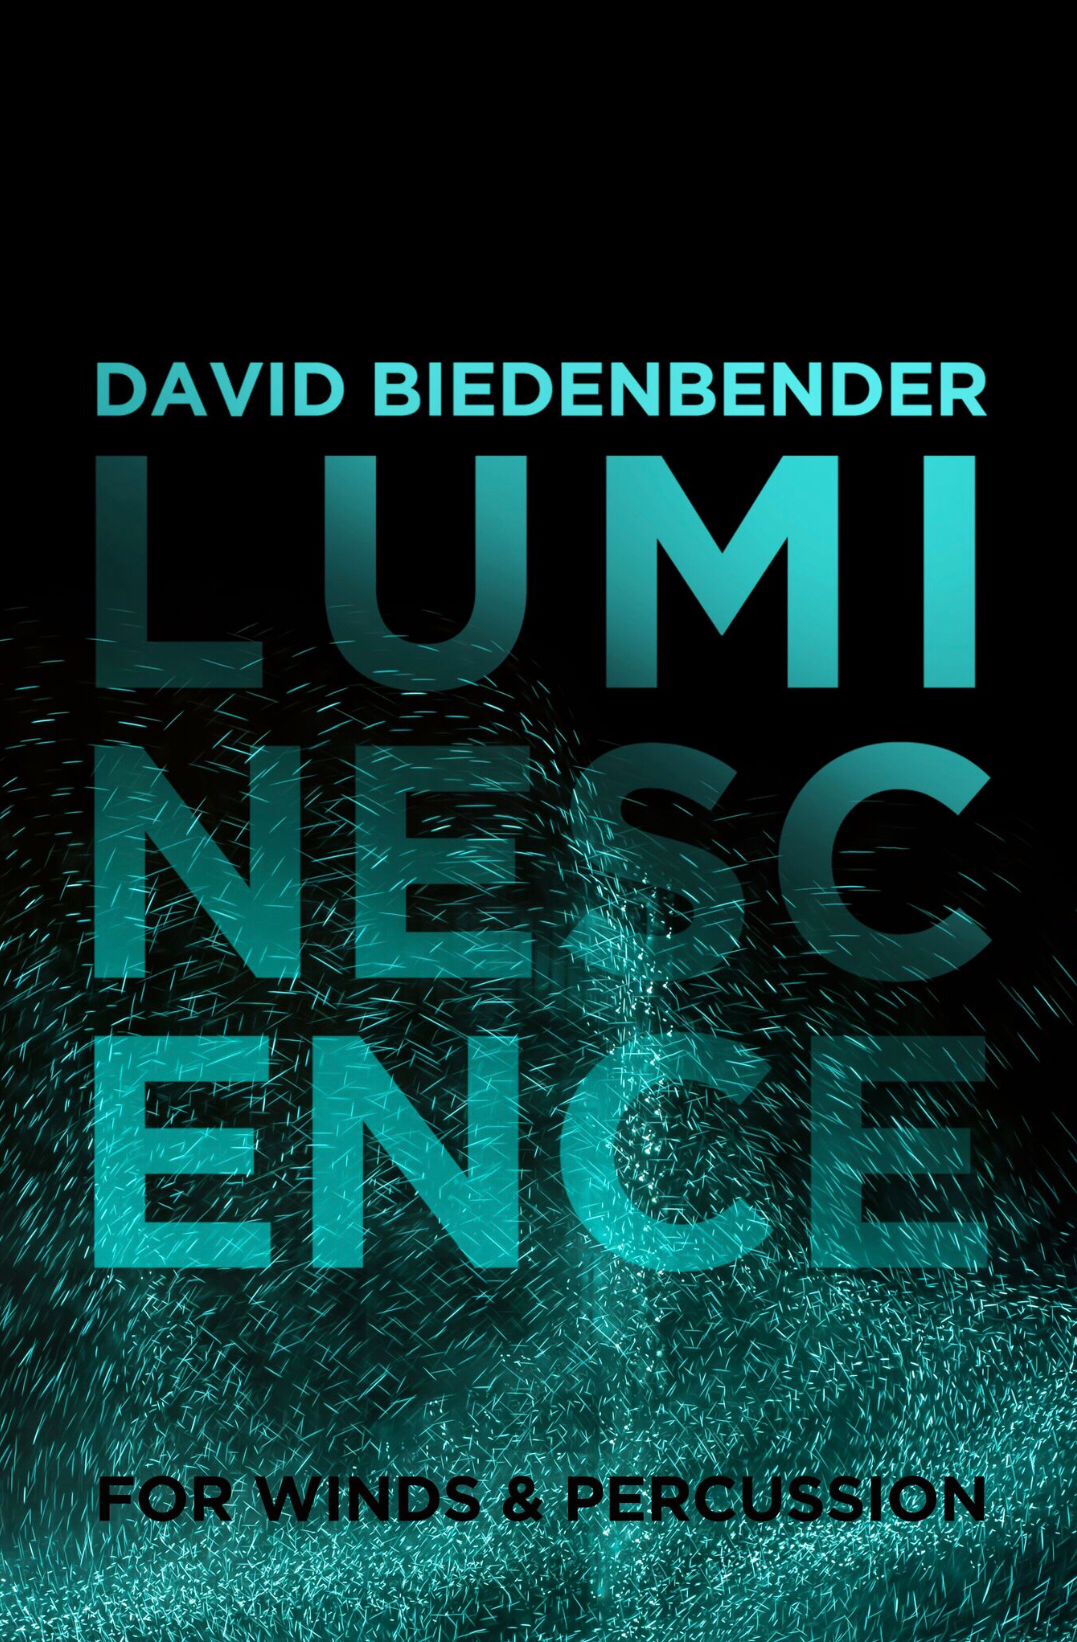 Luminescence (Score Only) by David Biedenbender